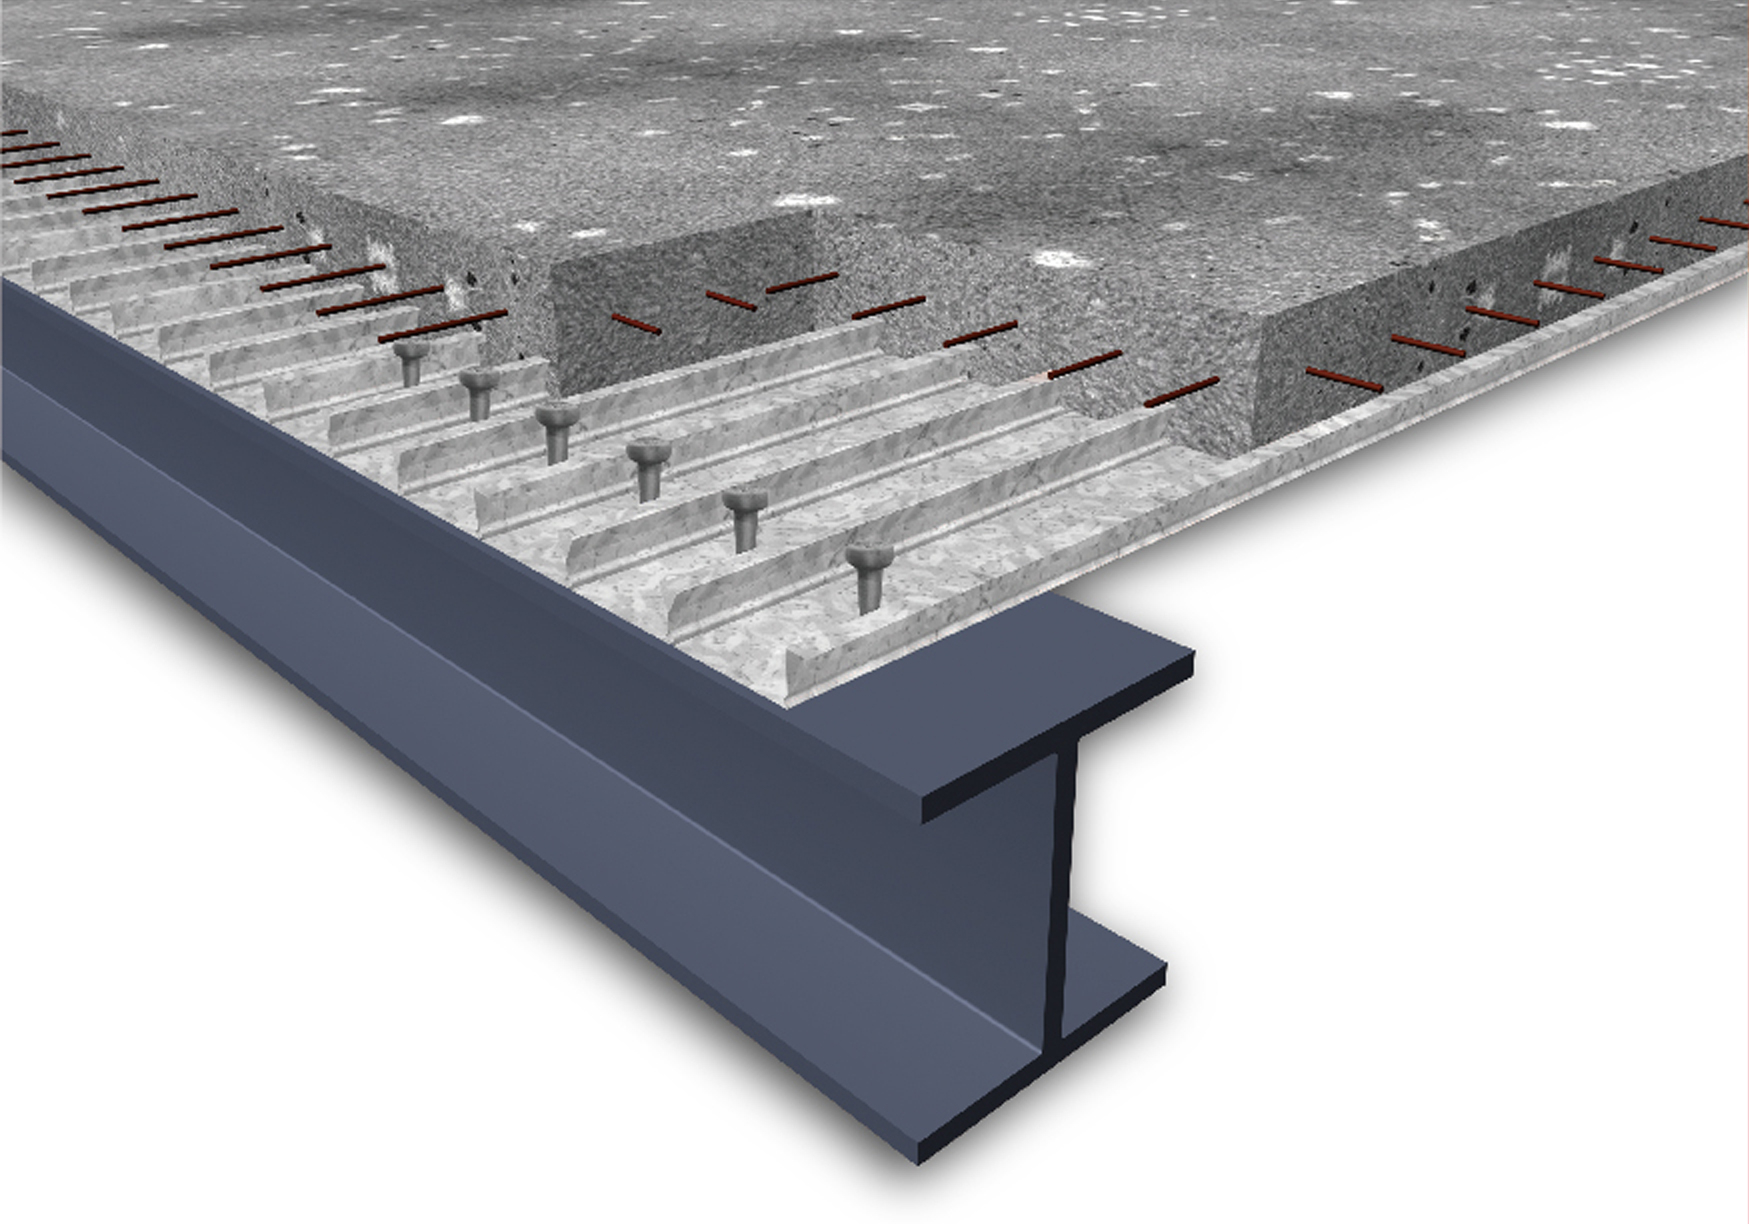 Steel Decking For Concrete Slabs • Decks Ideas